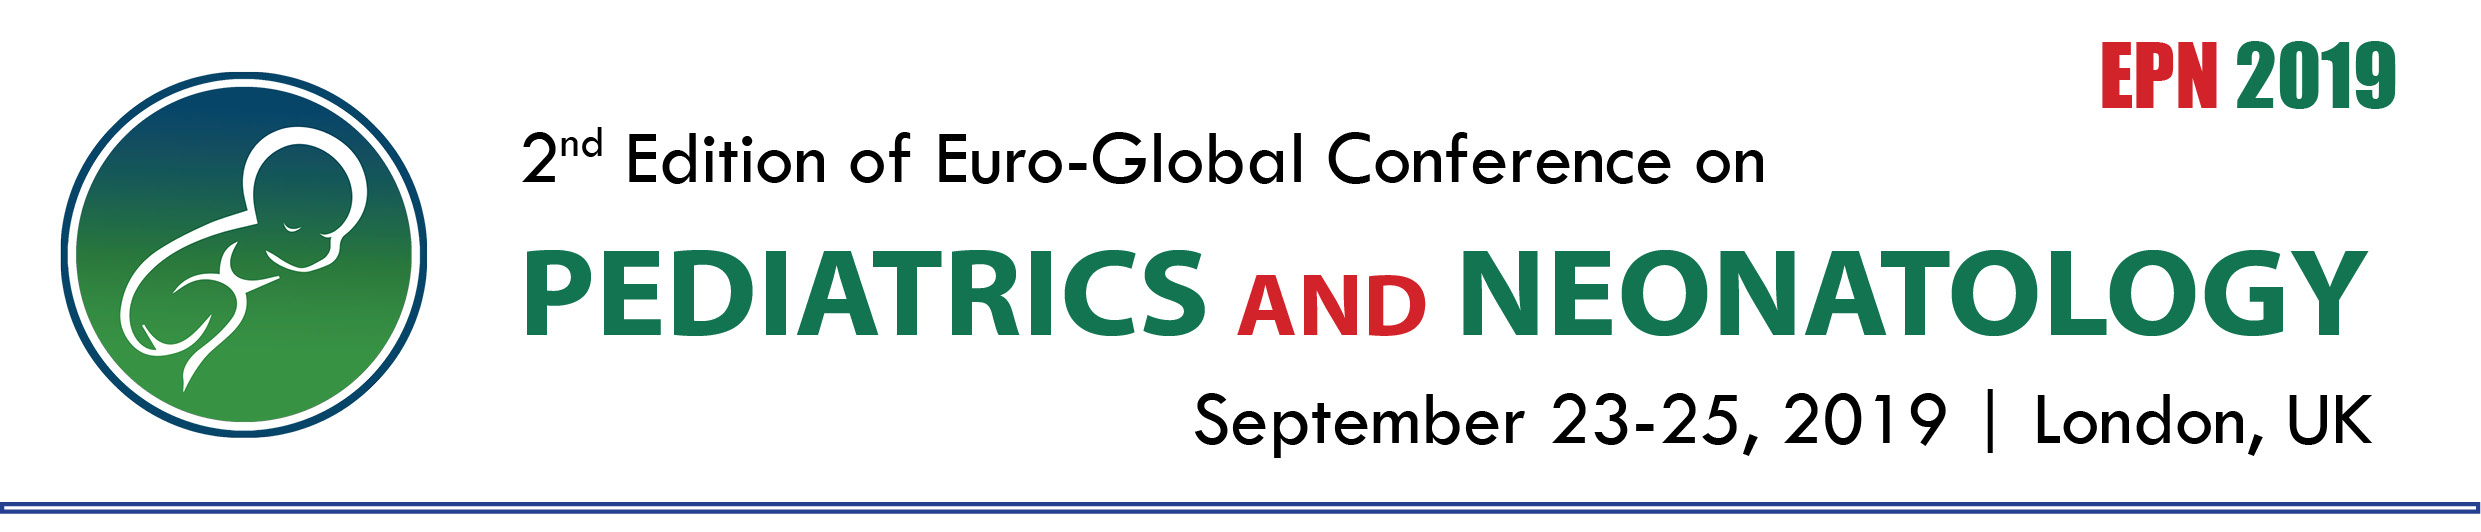 2nd Euro-Global Conference on Pediatrics and Neonatology, England, London, United Kingdom